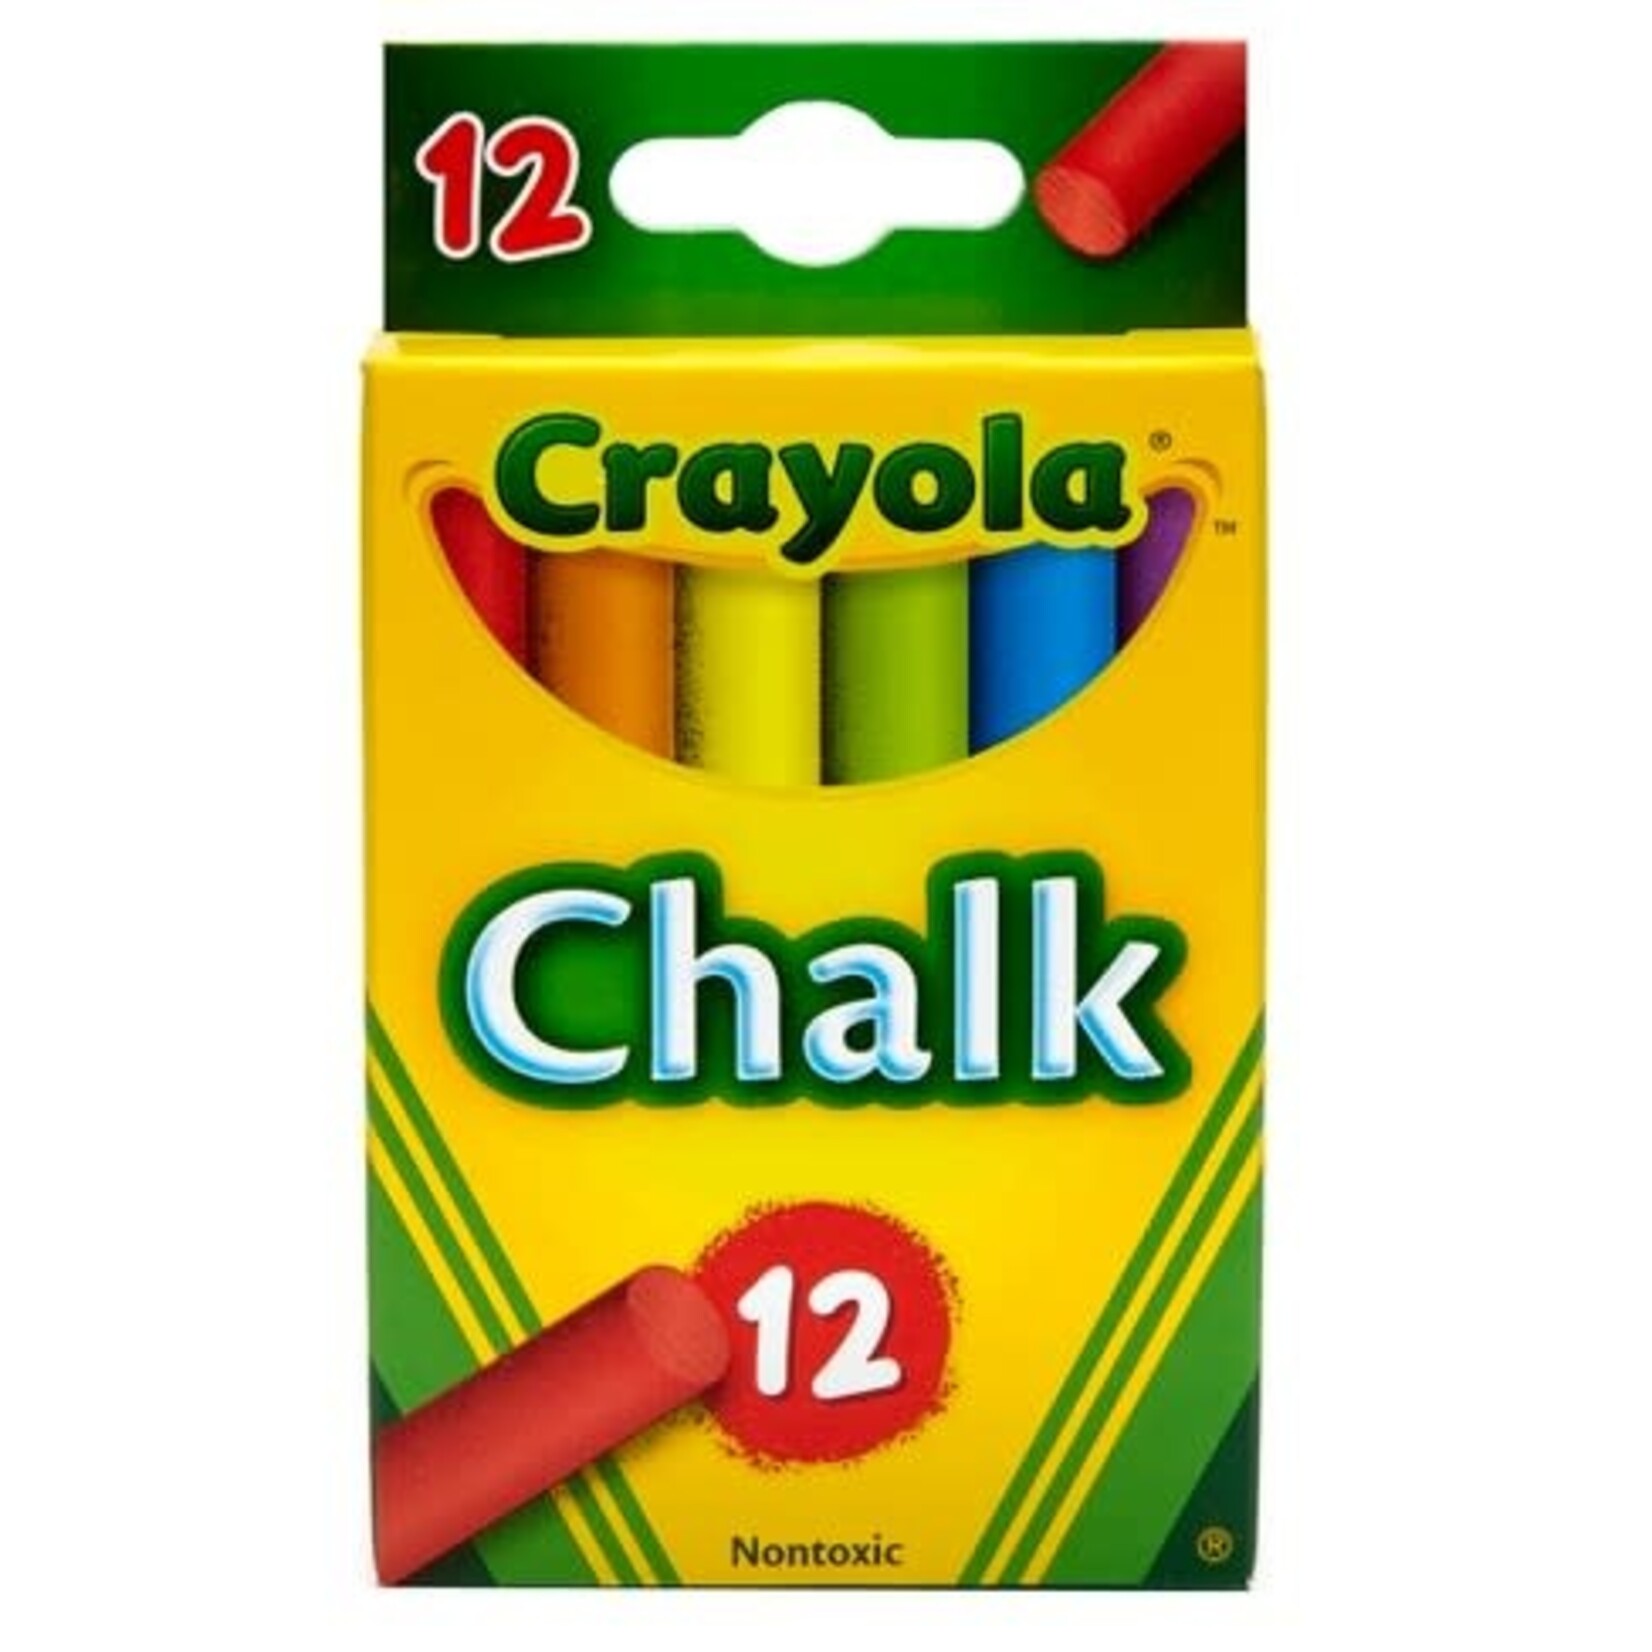 Crayola Chalk 12Ct Colored Box